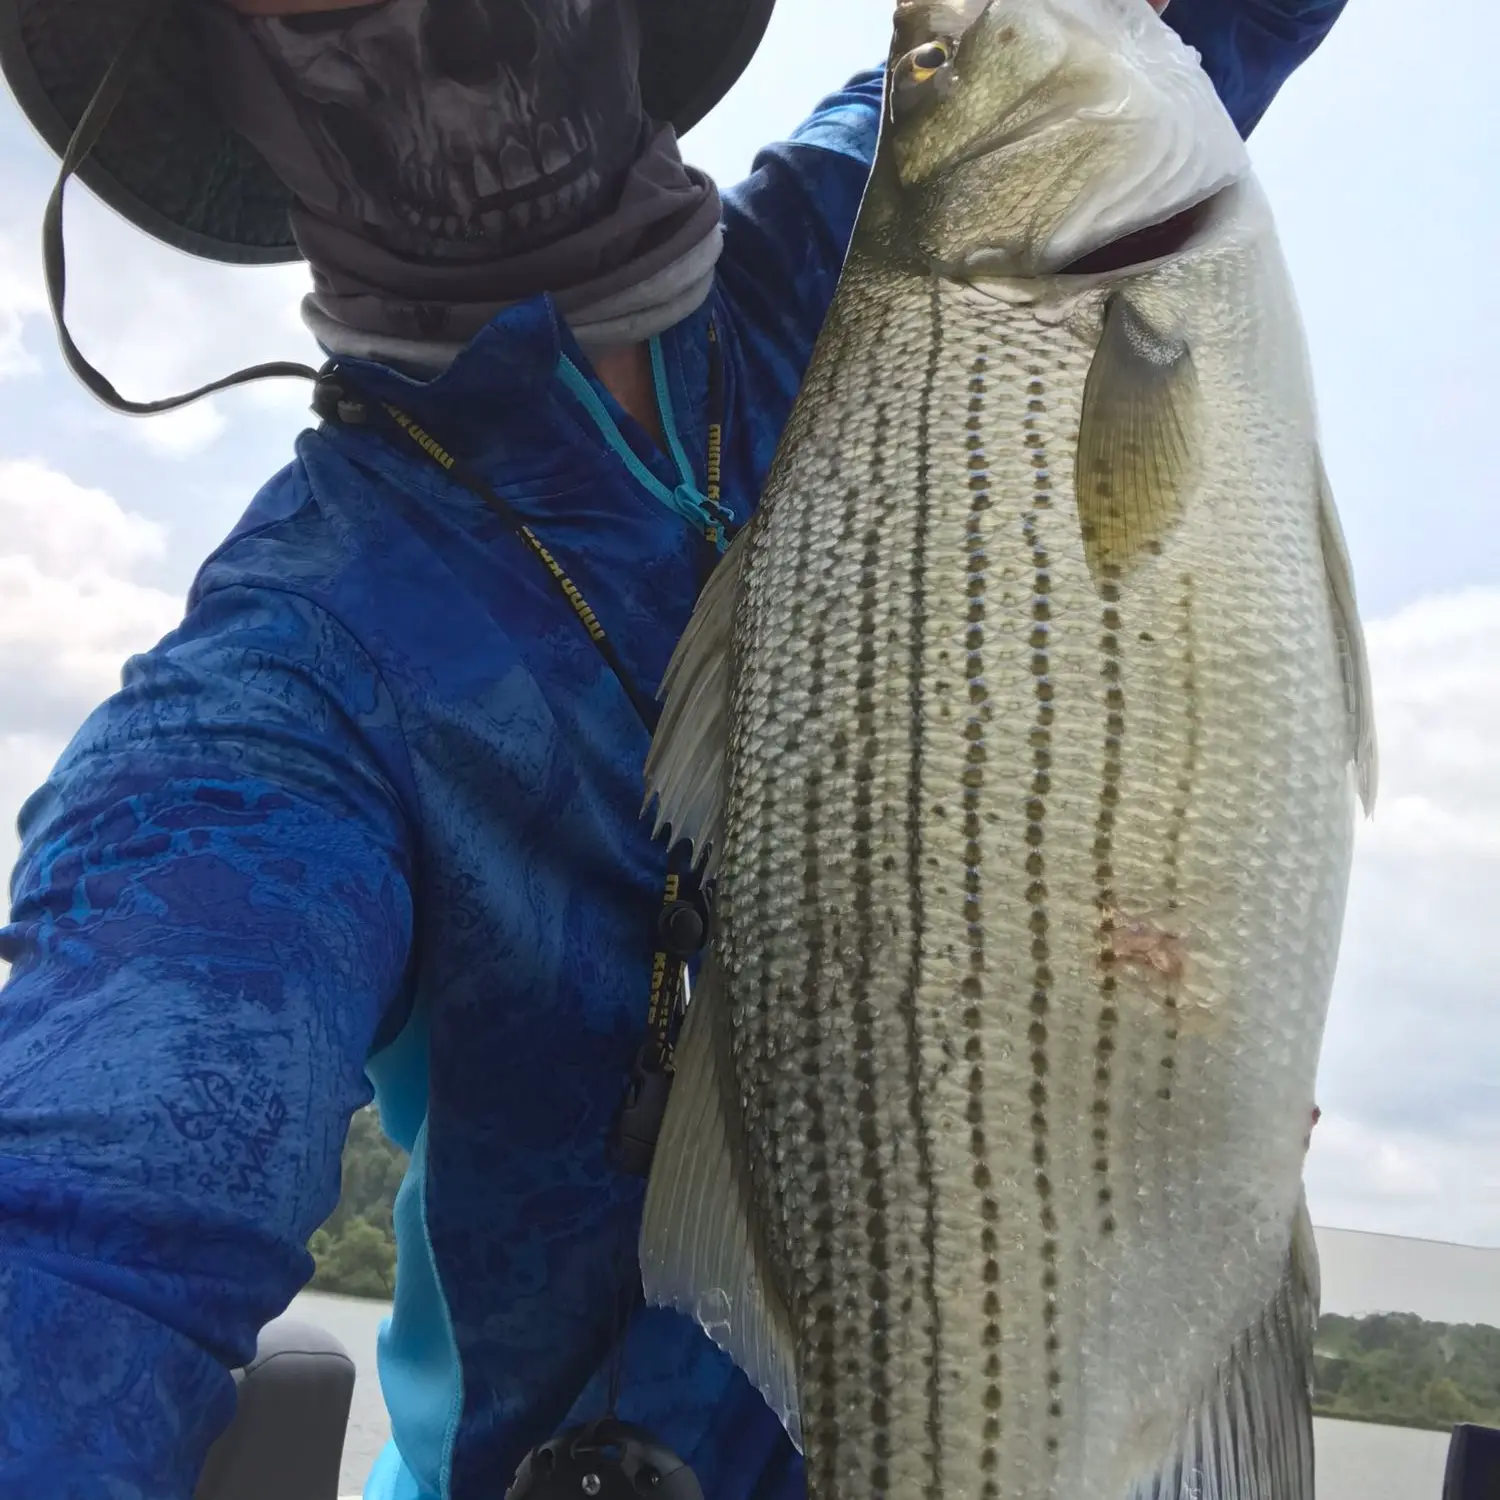 Fishing for Striped bass near you